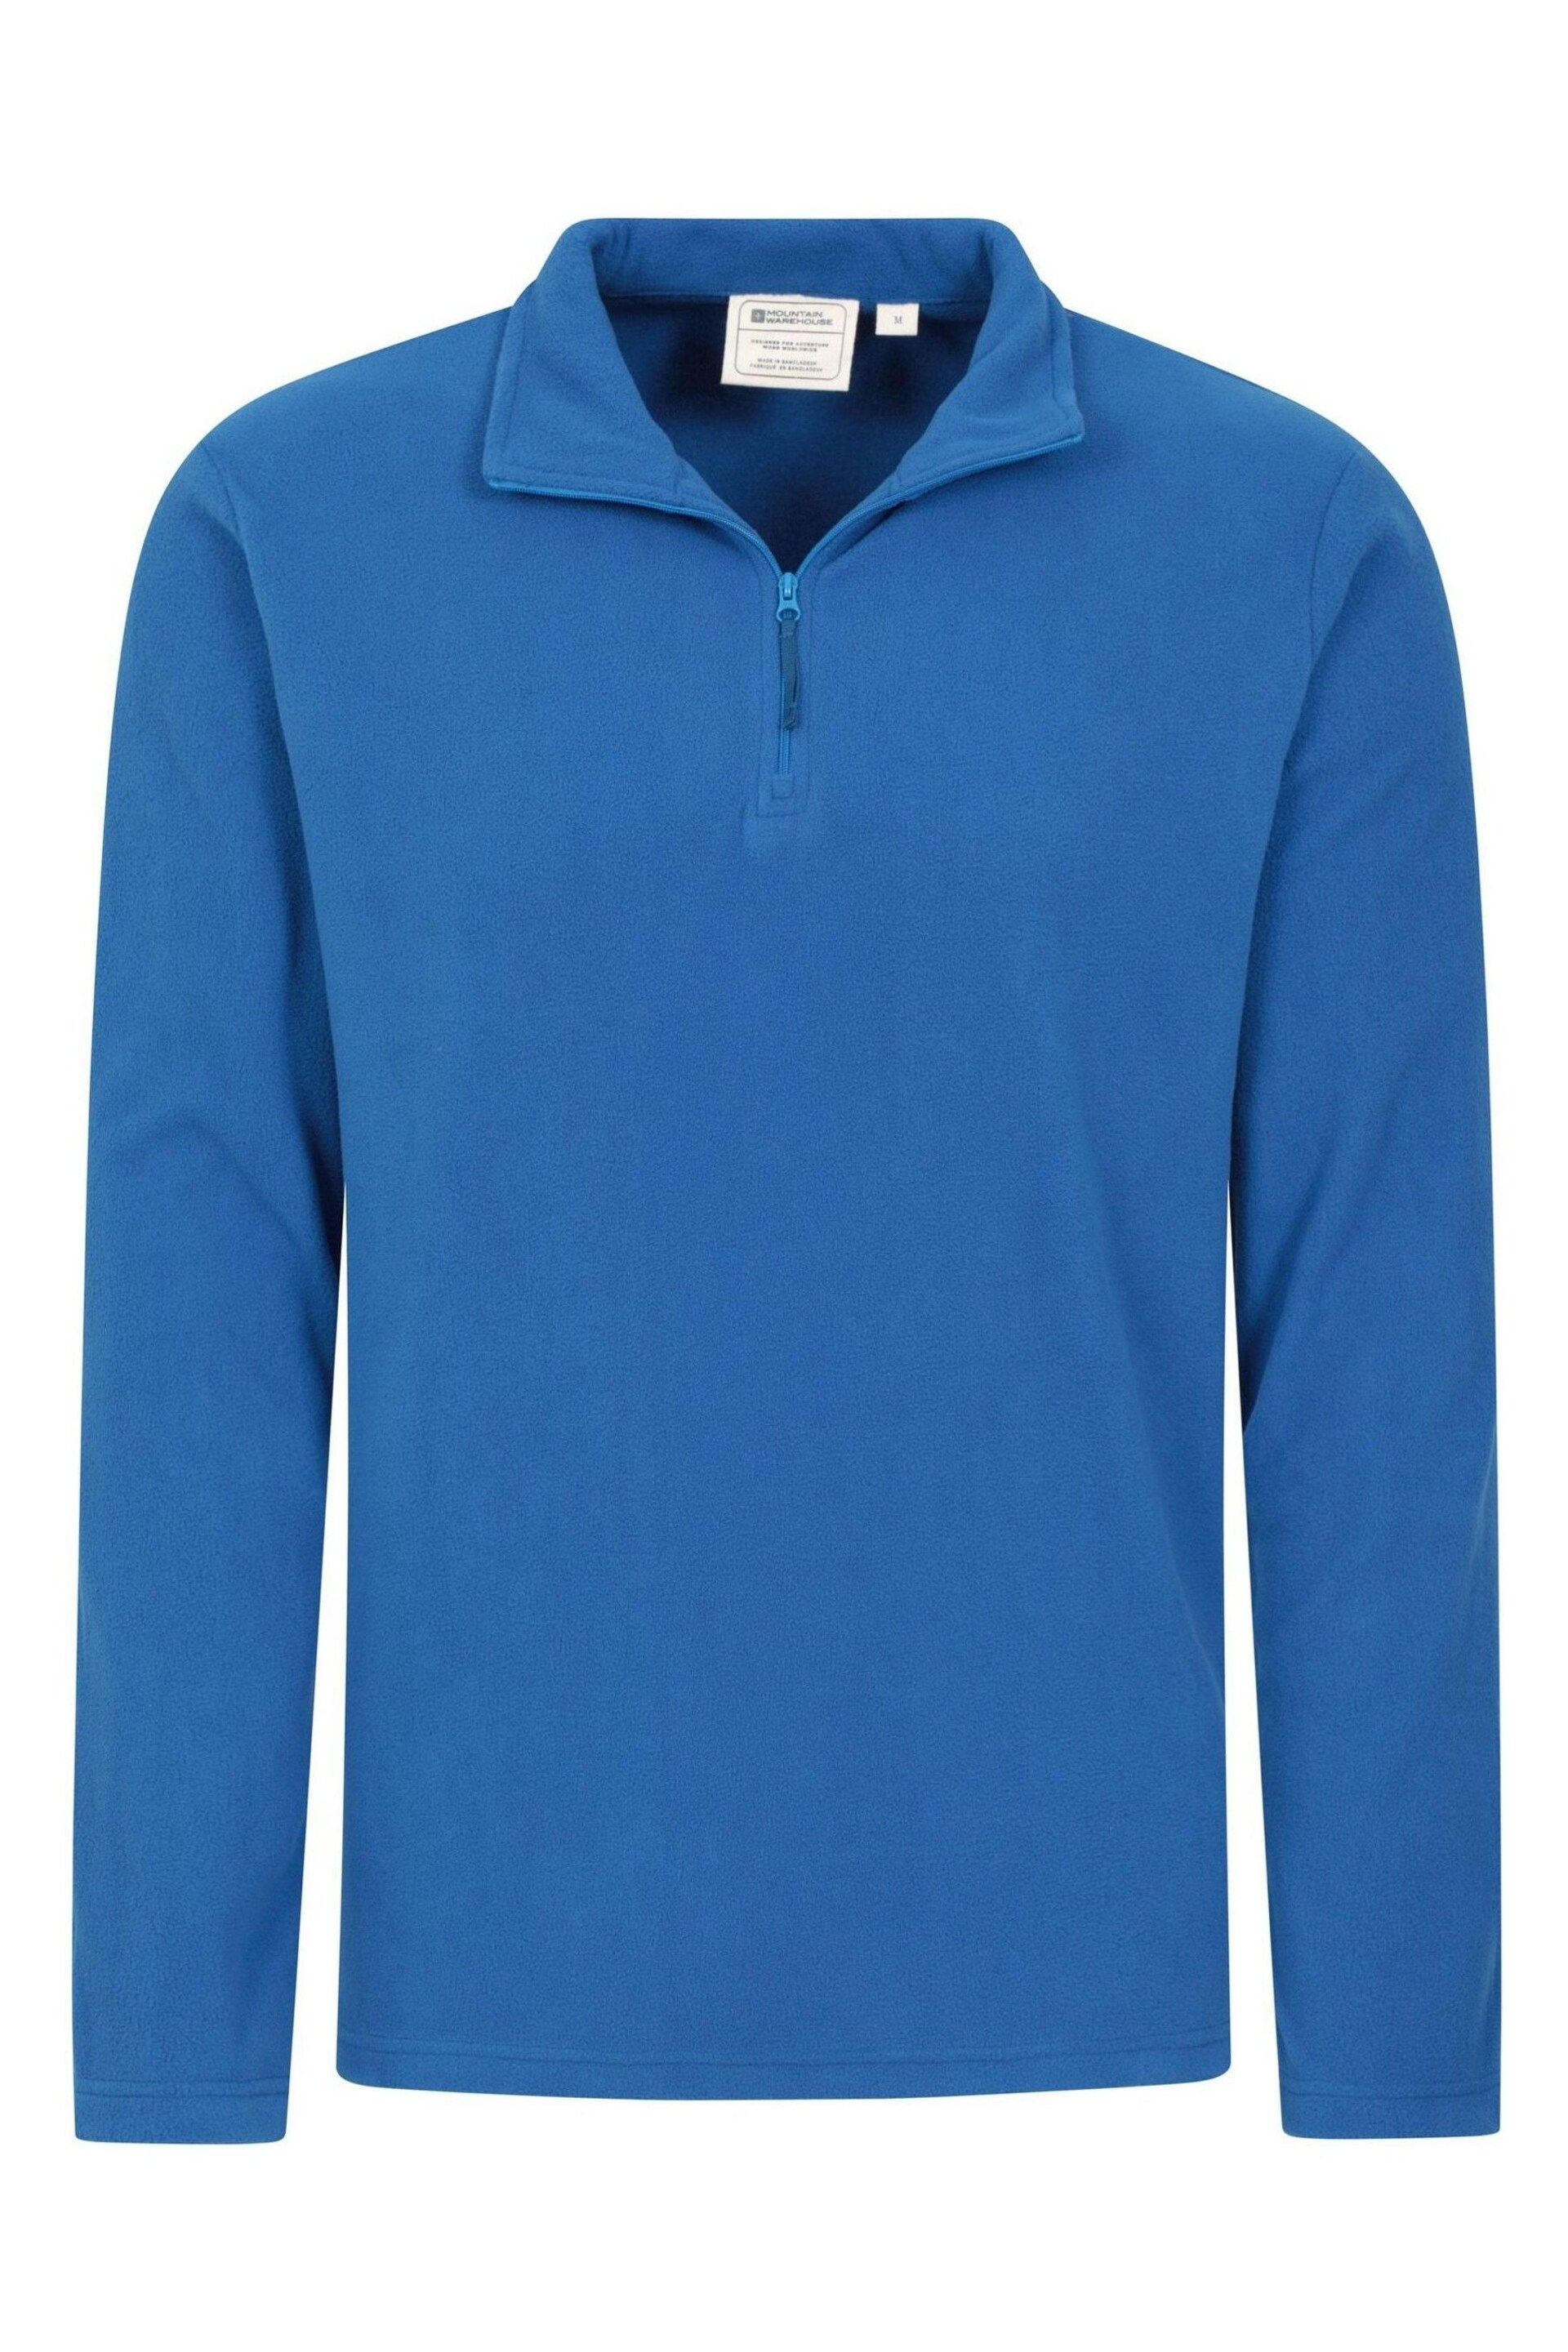 Mountain Warehouse Blue Camber Half-Zip Fleece - Mens - Image 4 of 5